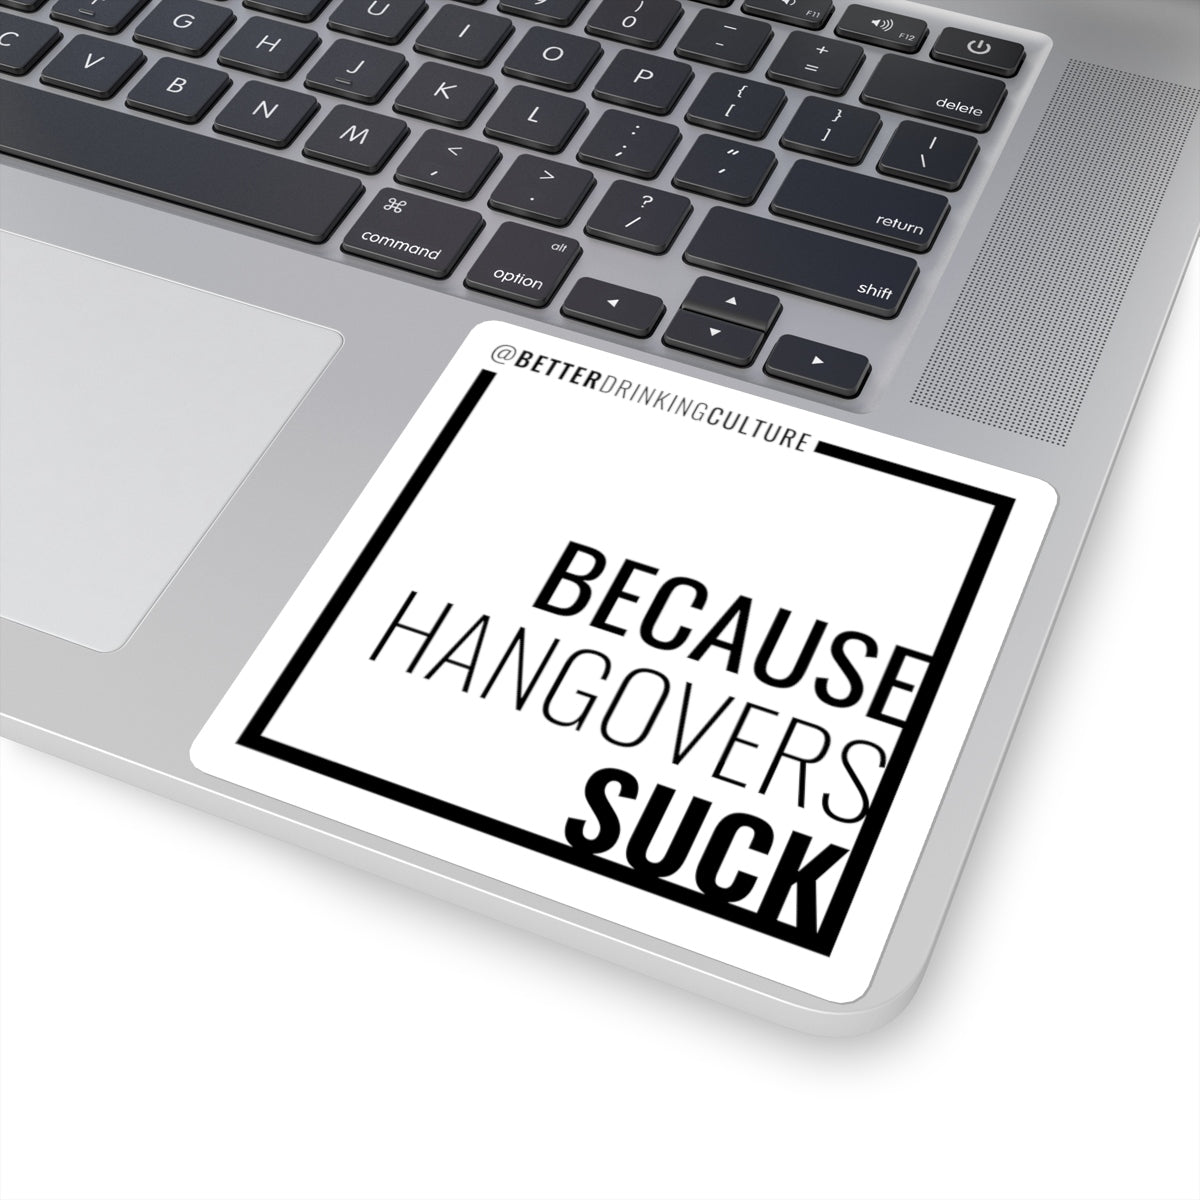 Because Hangovers Suck Sticker